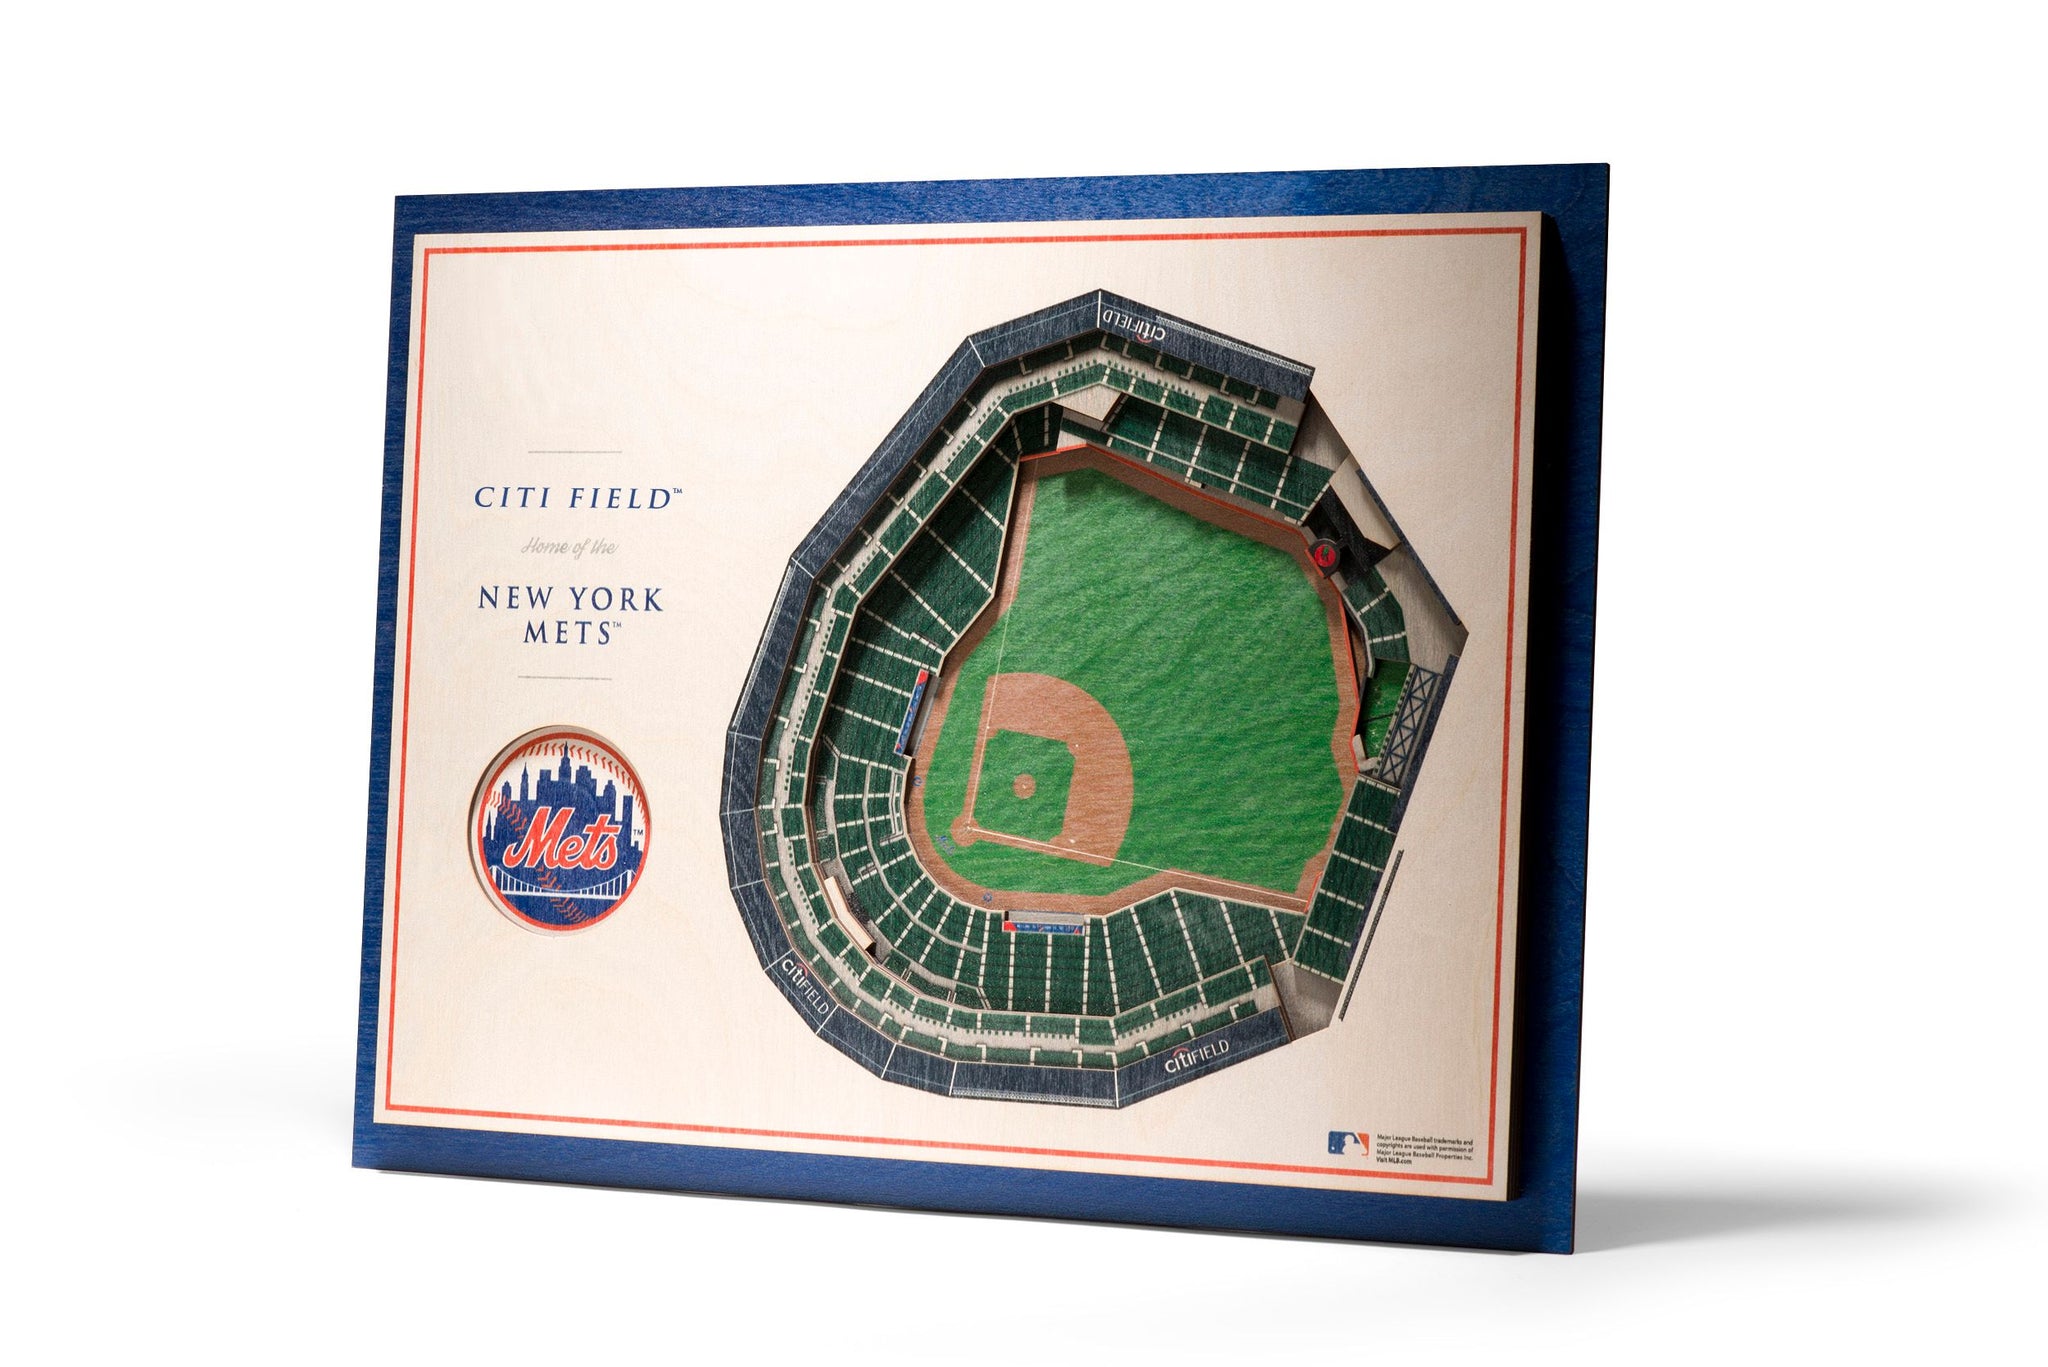 Citi Field Baseball Stadium Print, New York Mets Baseball